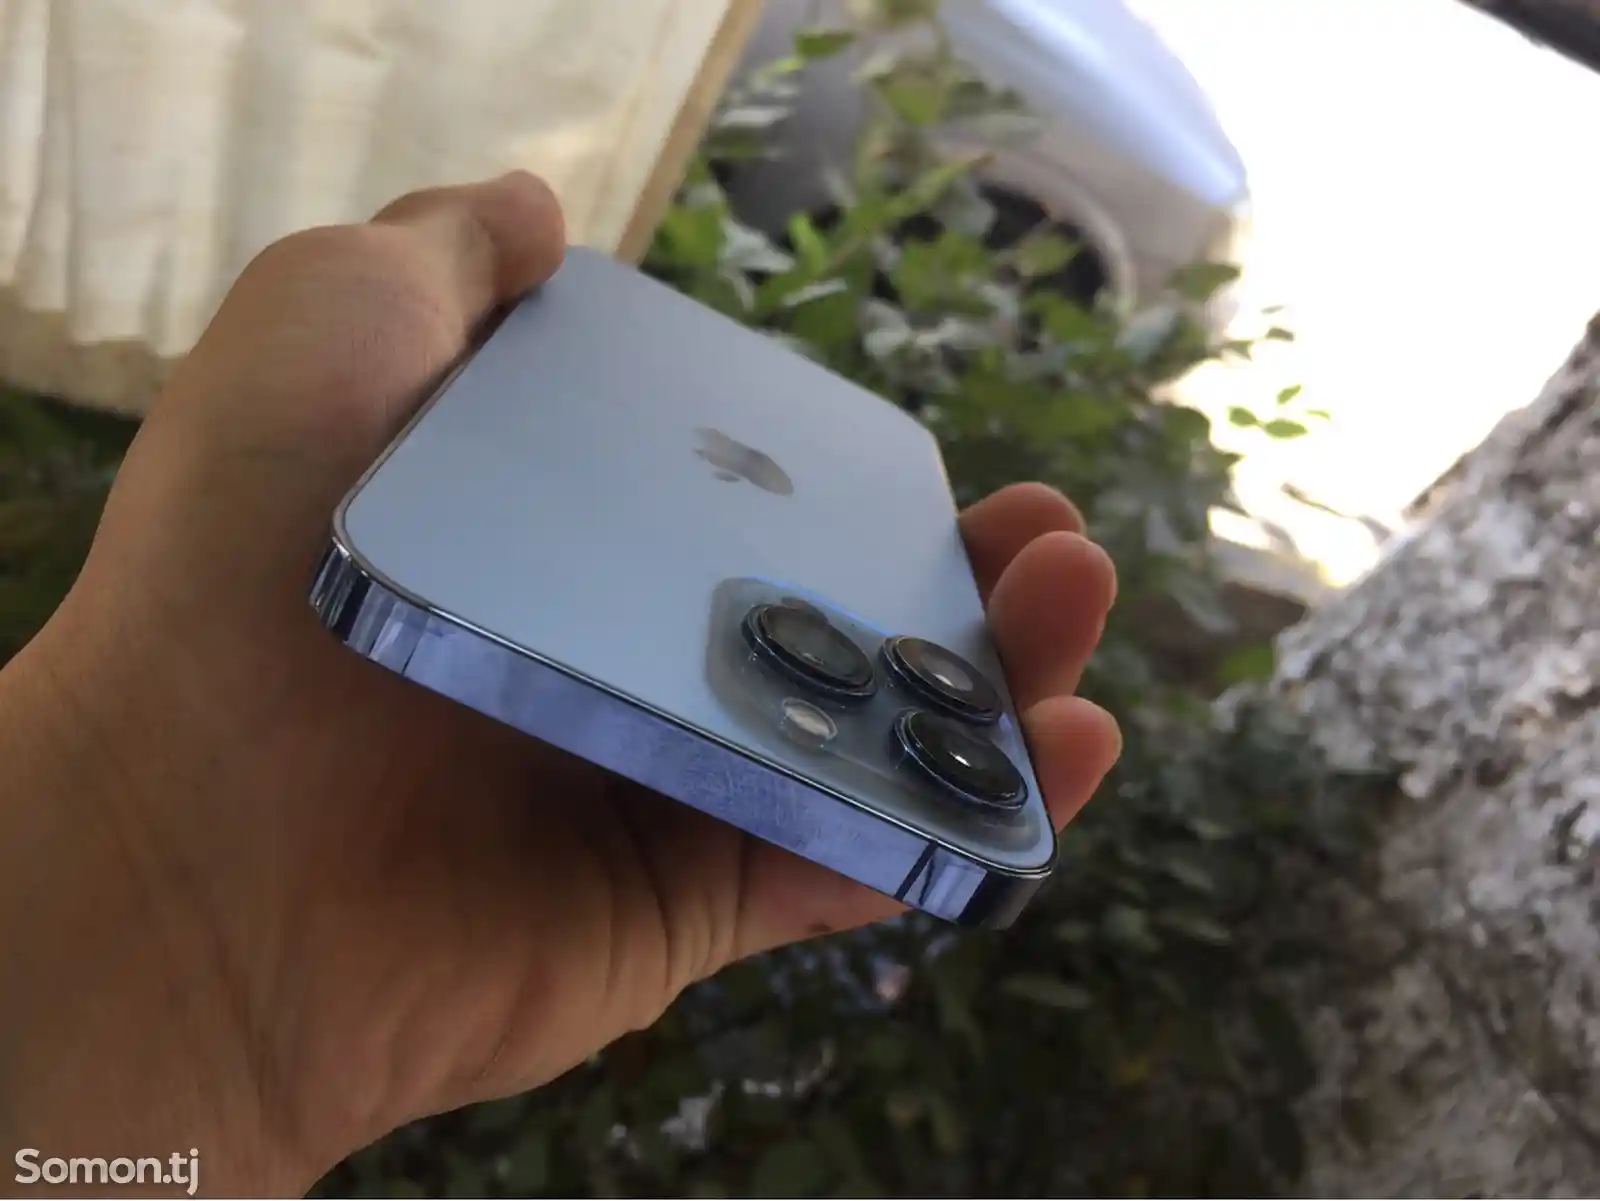 Apple iPhone 13 Pro Max, 128 gb, Sierra Blue-7